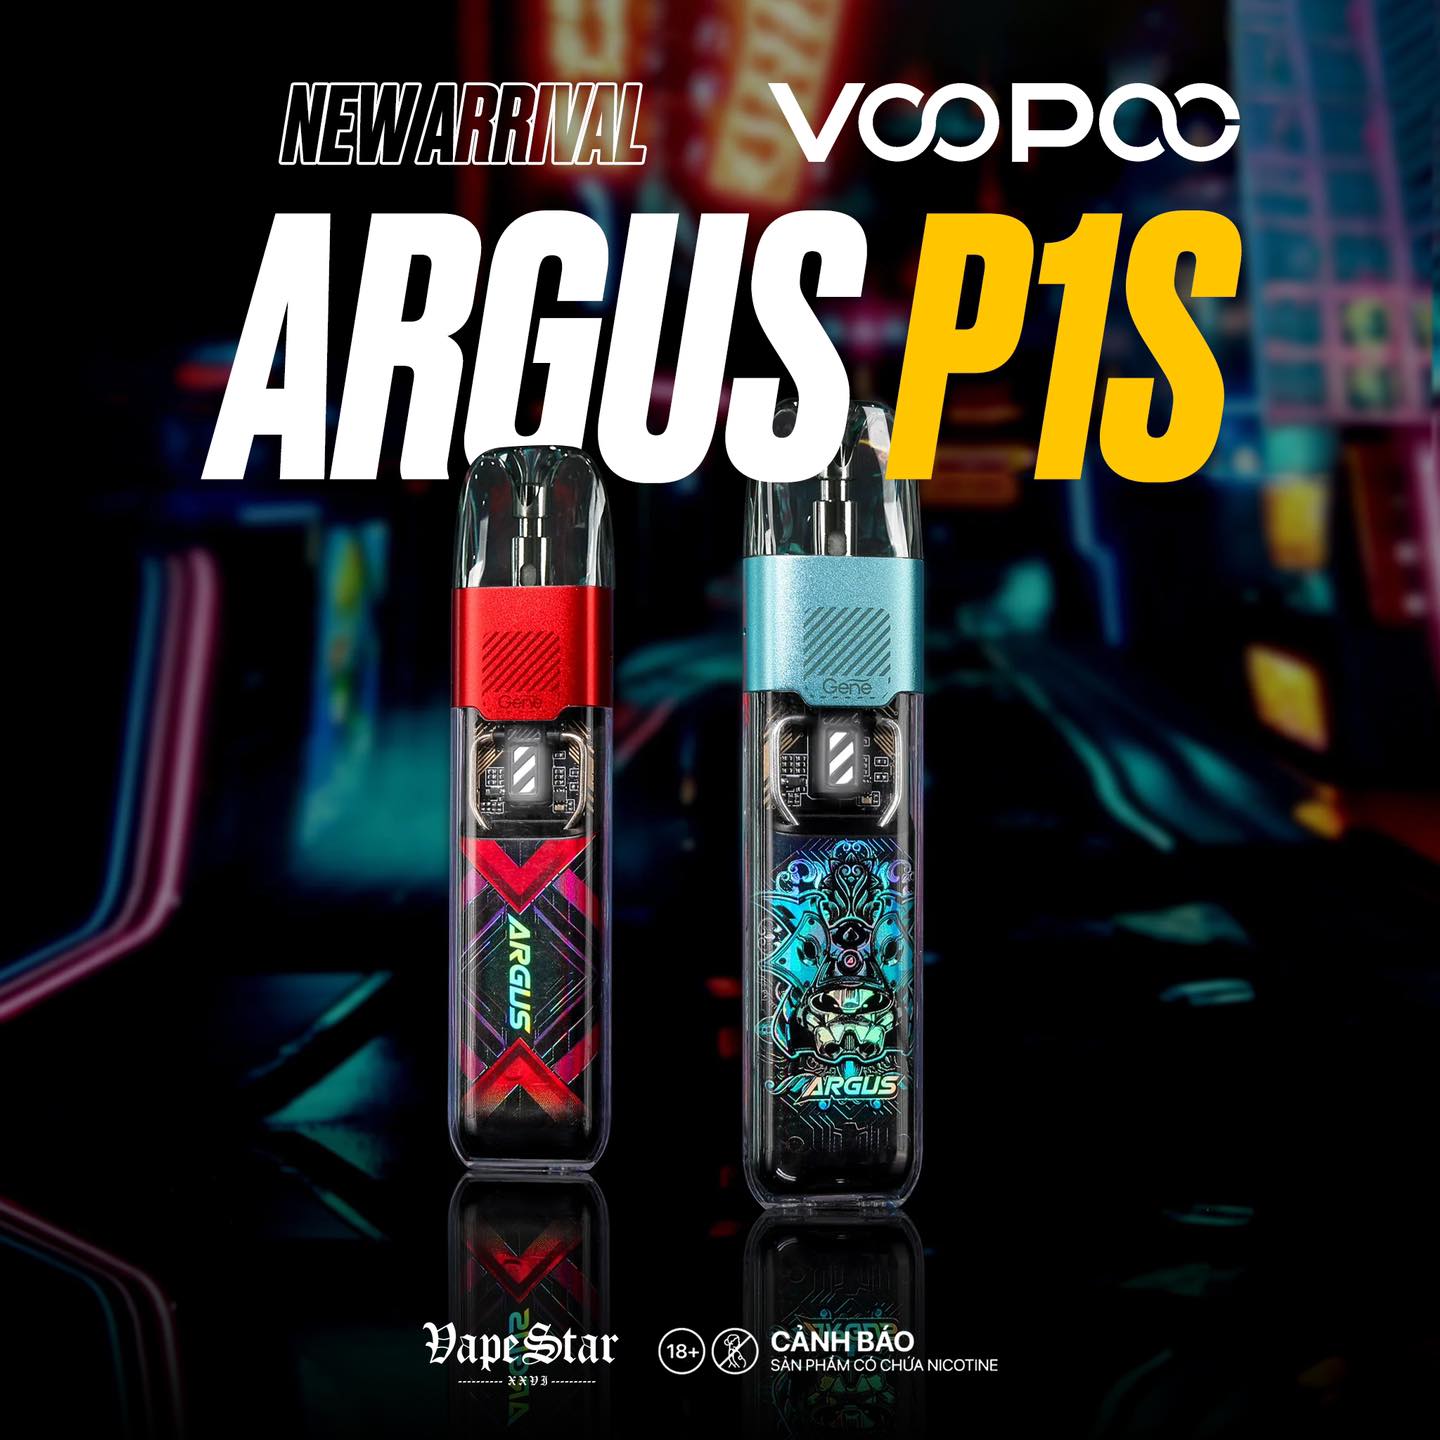 Voopoo Argus P1s - Trải Nghiệm Vaping Tương Lai